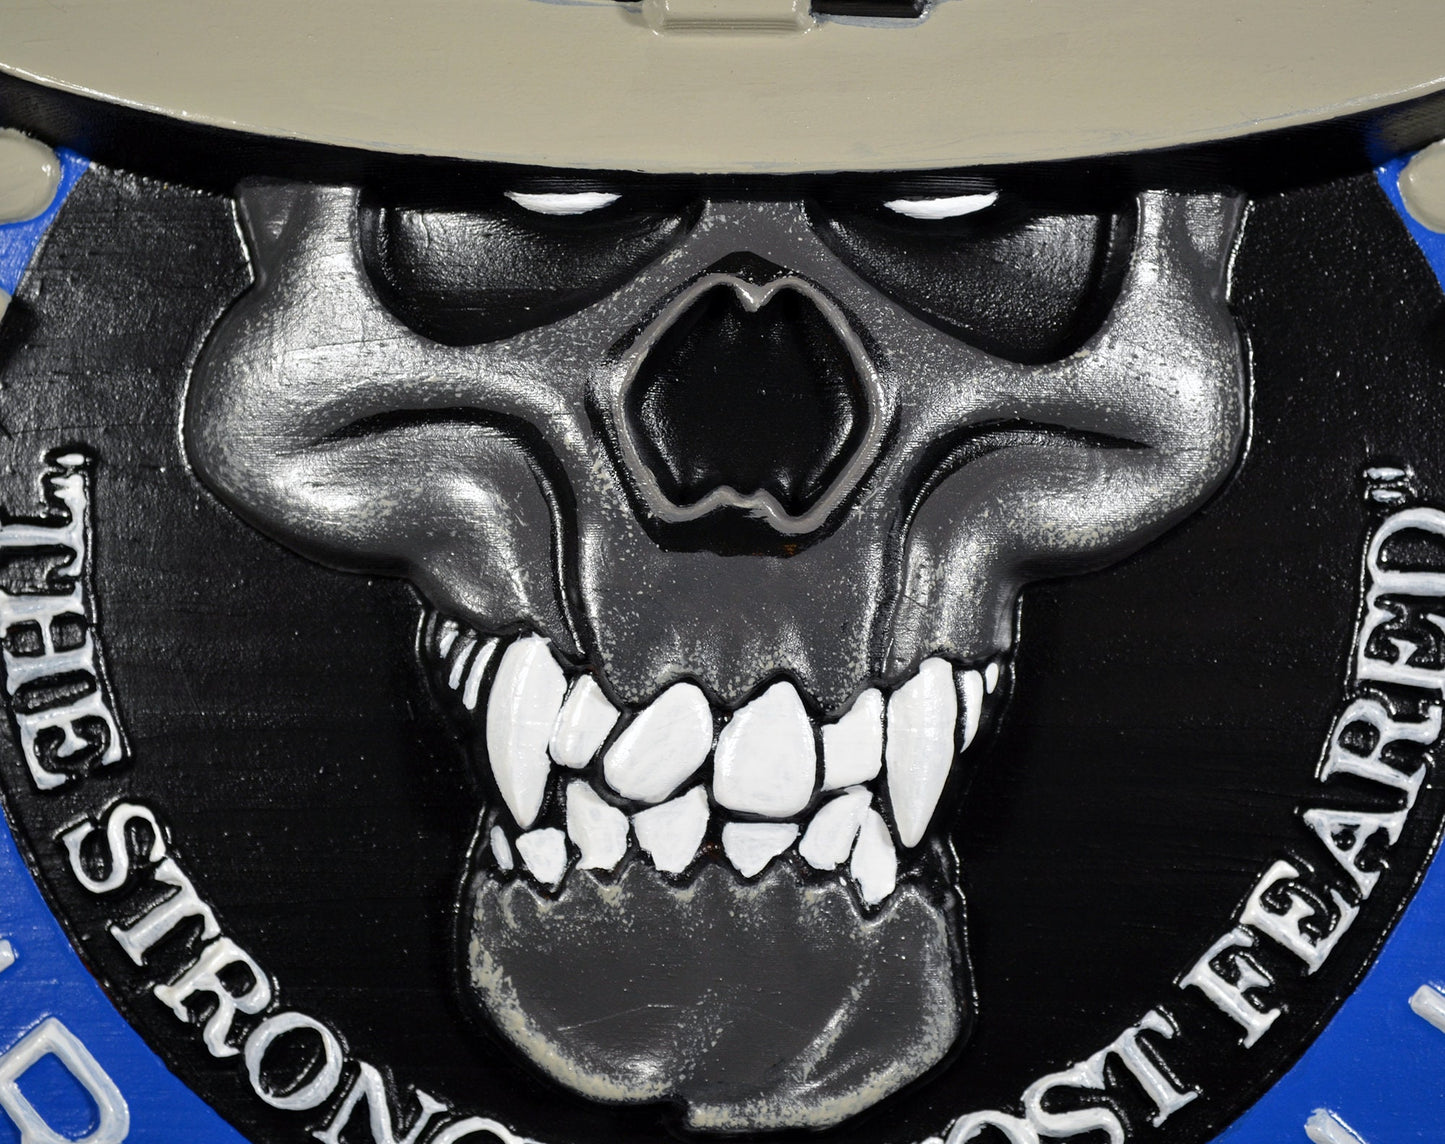 USMC 3rd Recruit Training Battalion Kilo Co Dark, 3d wood CNC, military plaque